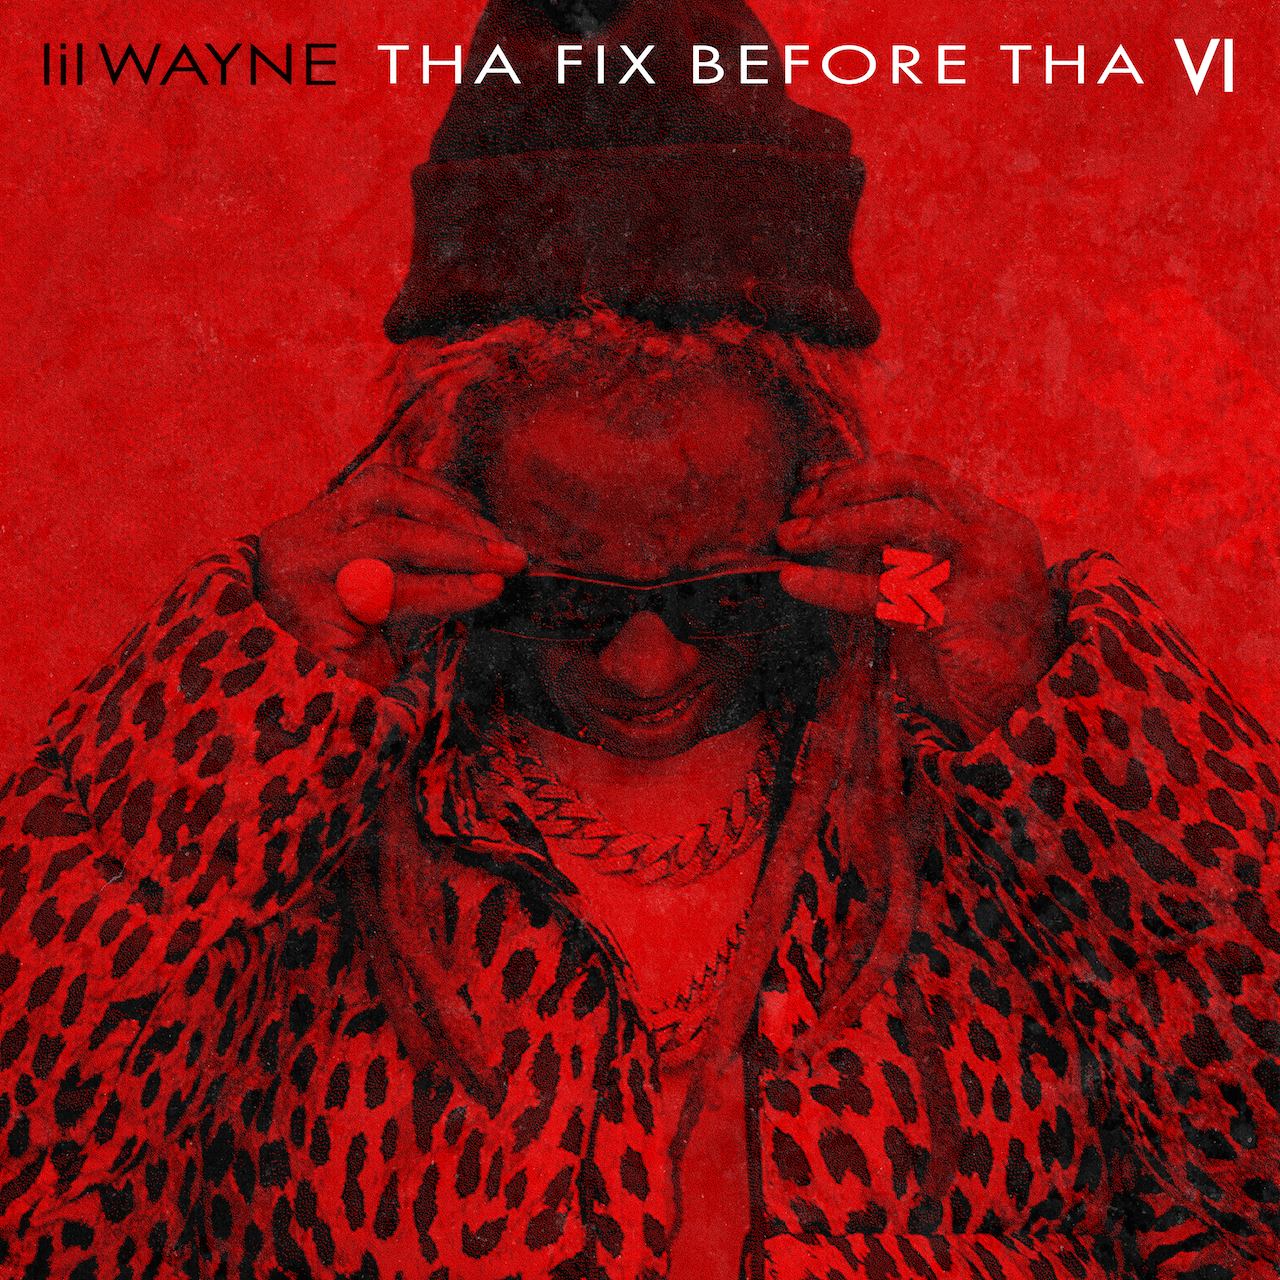 Lilwayne Thafixbeforethaiv Finalcover Lil Wayne Shares New Mixtape ‘Tha Fix Before Tha Vi’